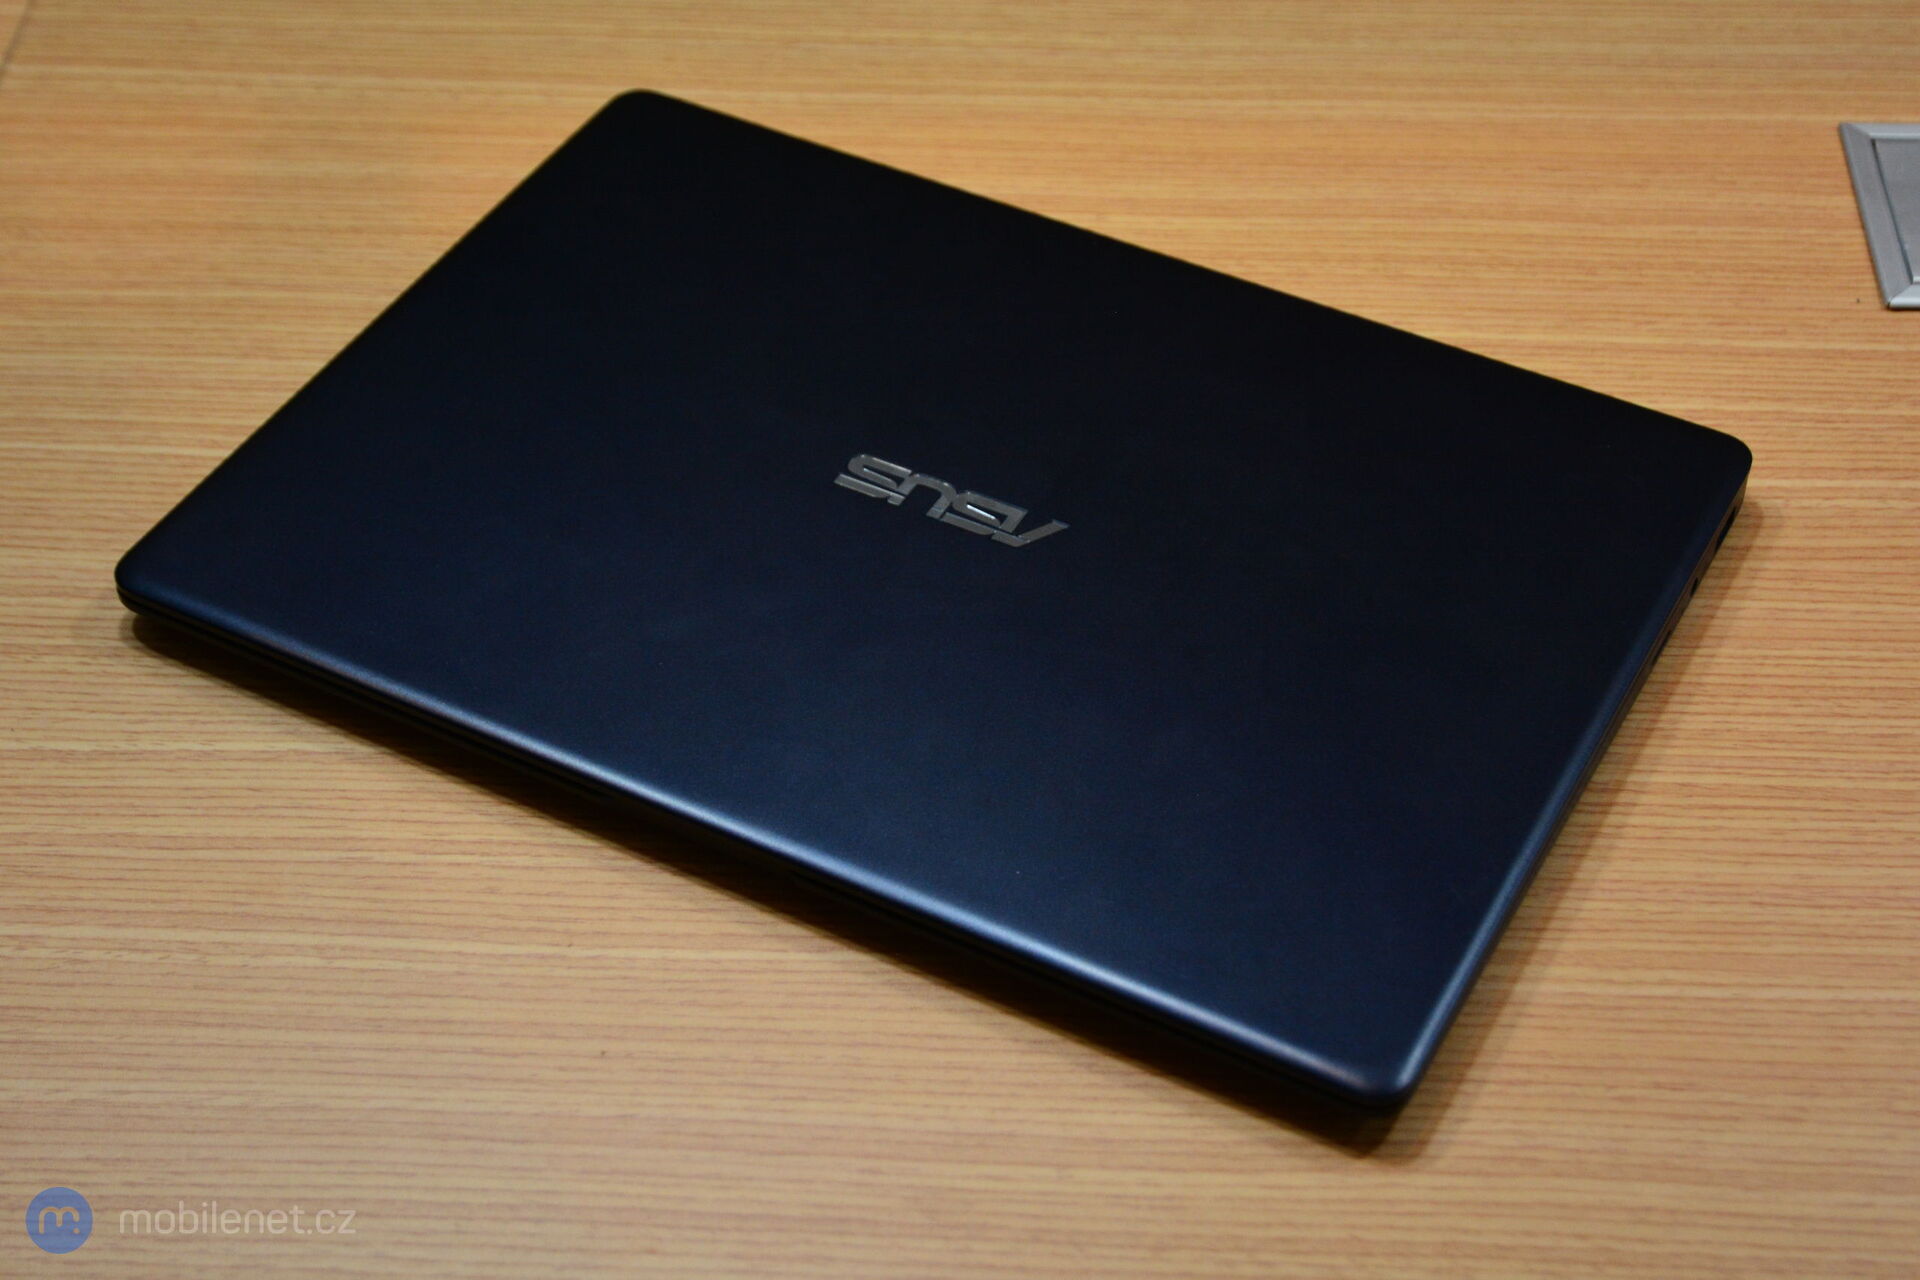 ASUS ZenBook 13 (UX331UAL)